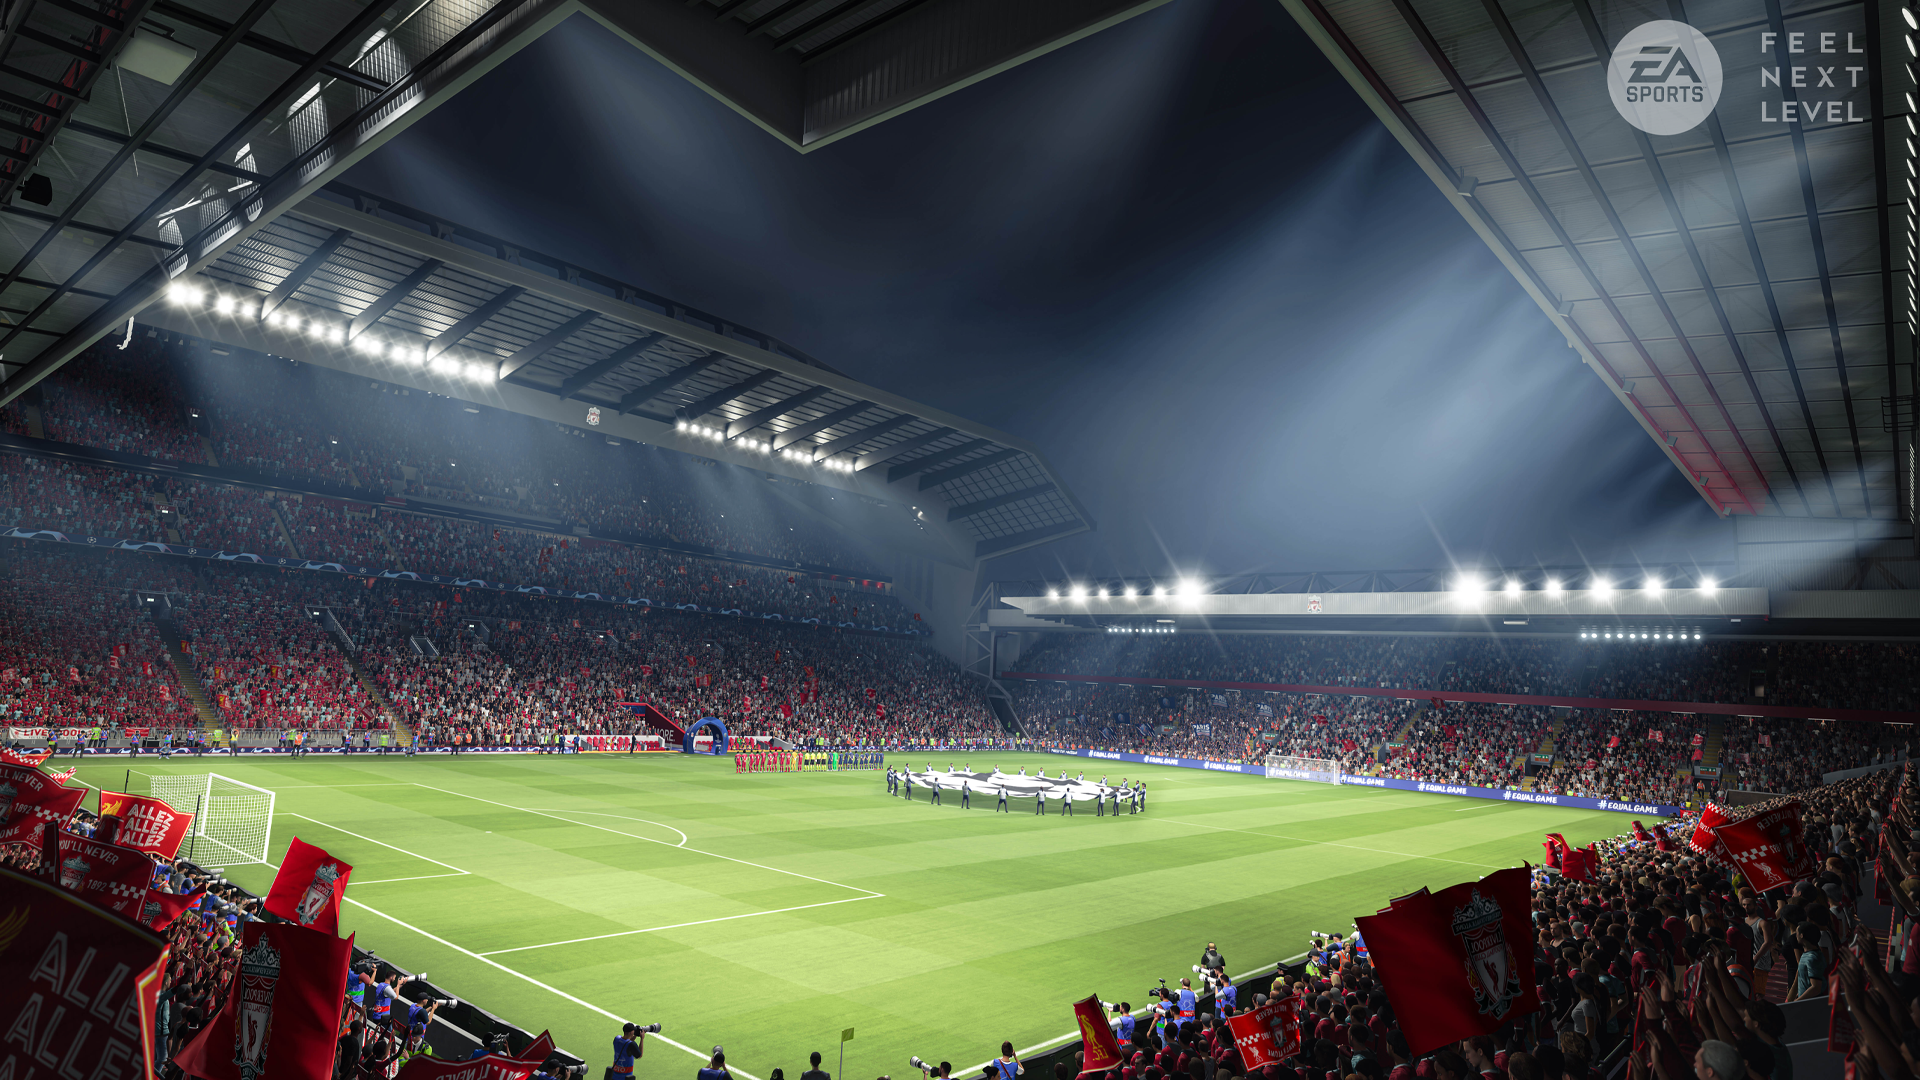 An English stadium in FIFA 22